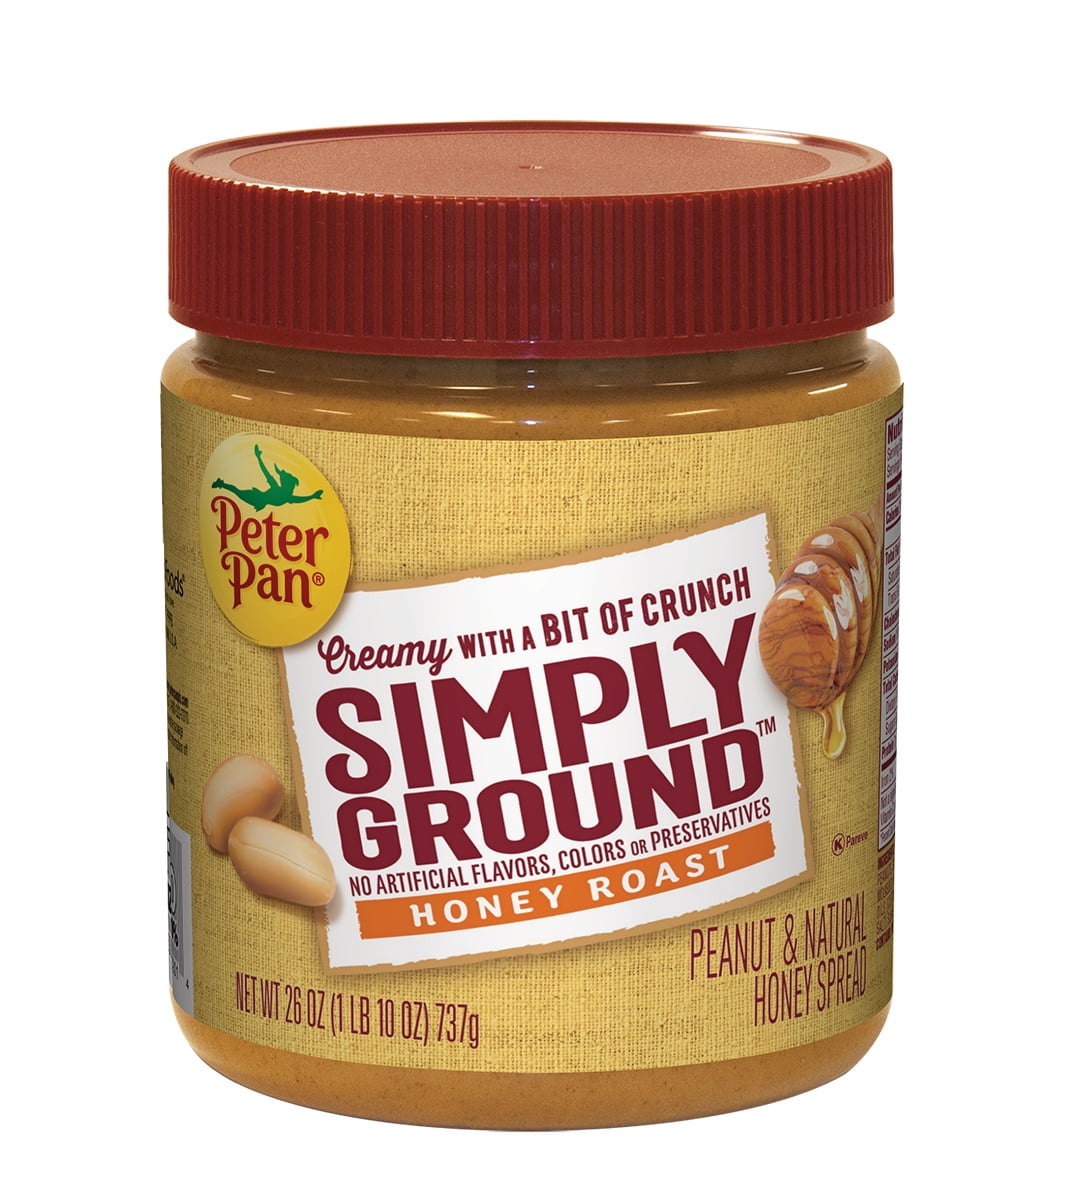 Peter Pan Simply Ground Honey Roast Peanut Butter, 26 oz - Walmart.com